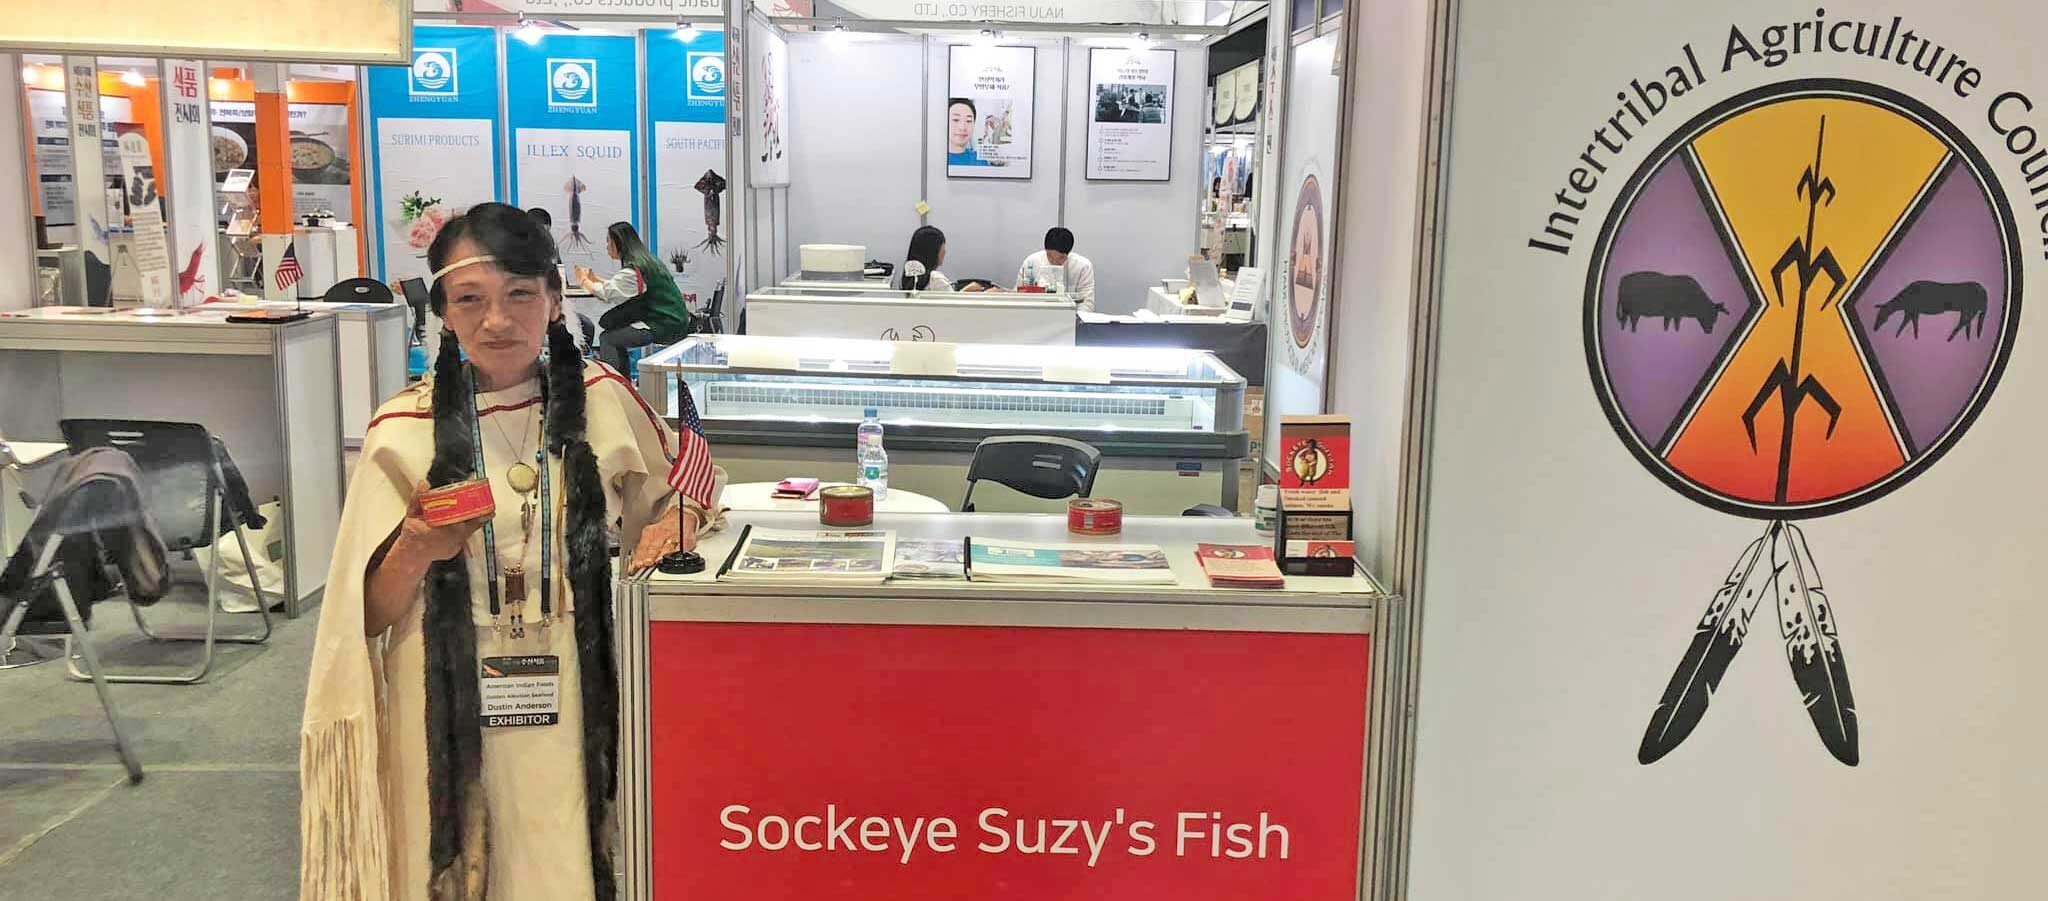 Sockeye Suzy’s Fish